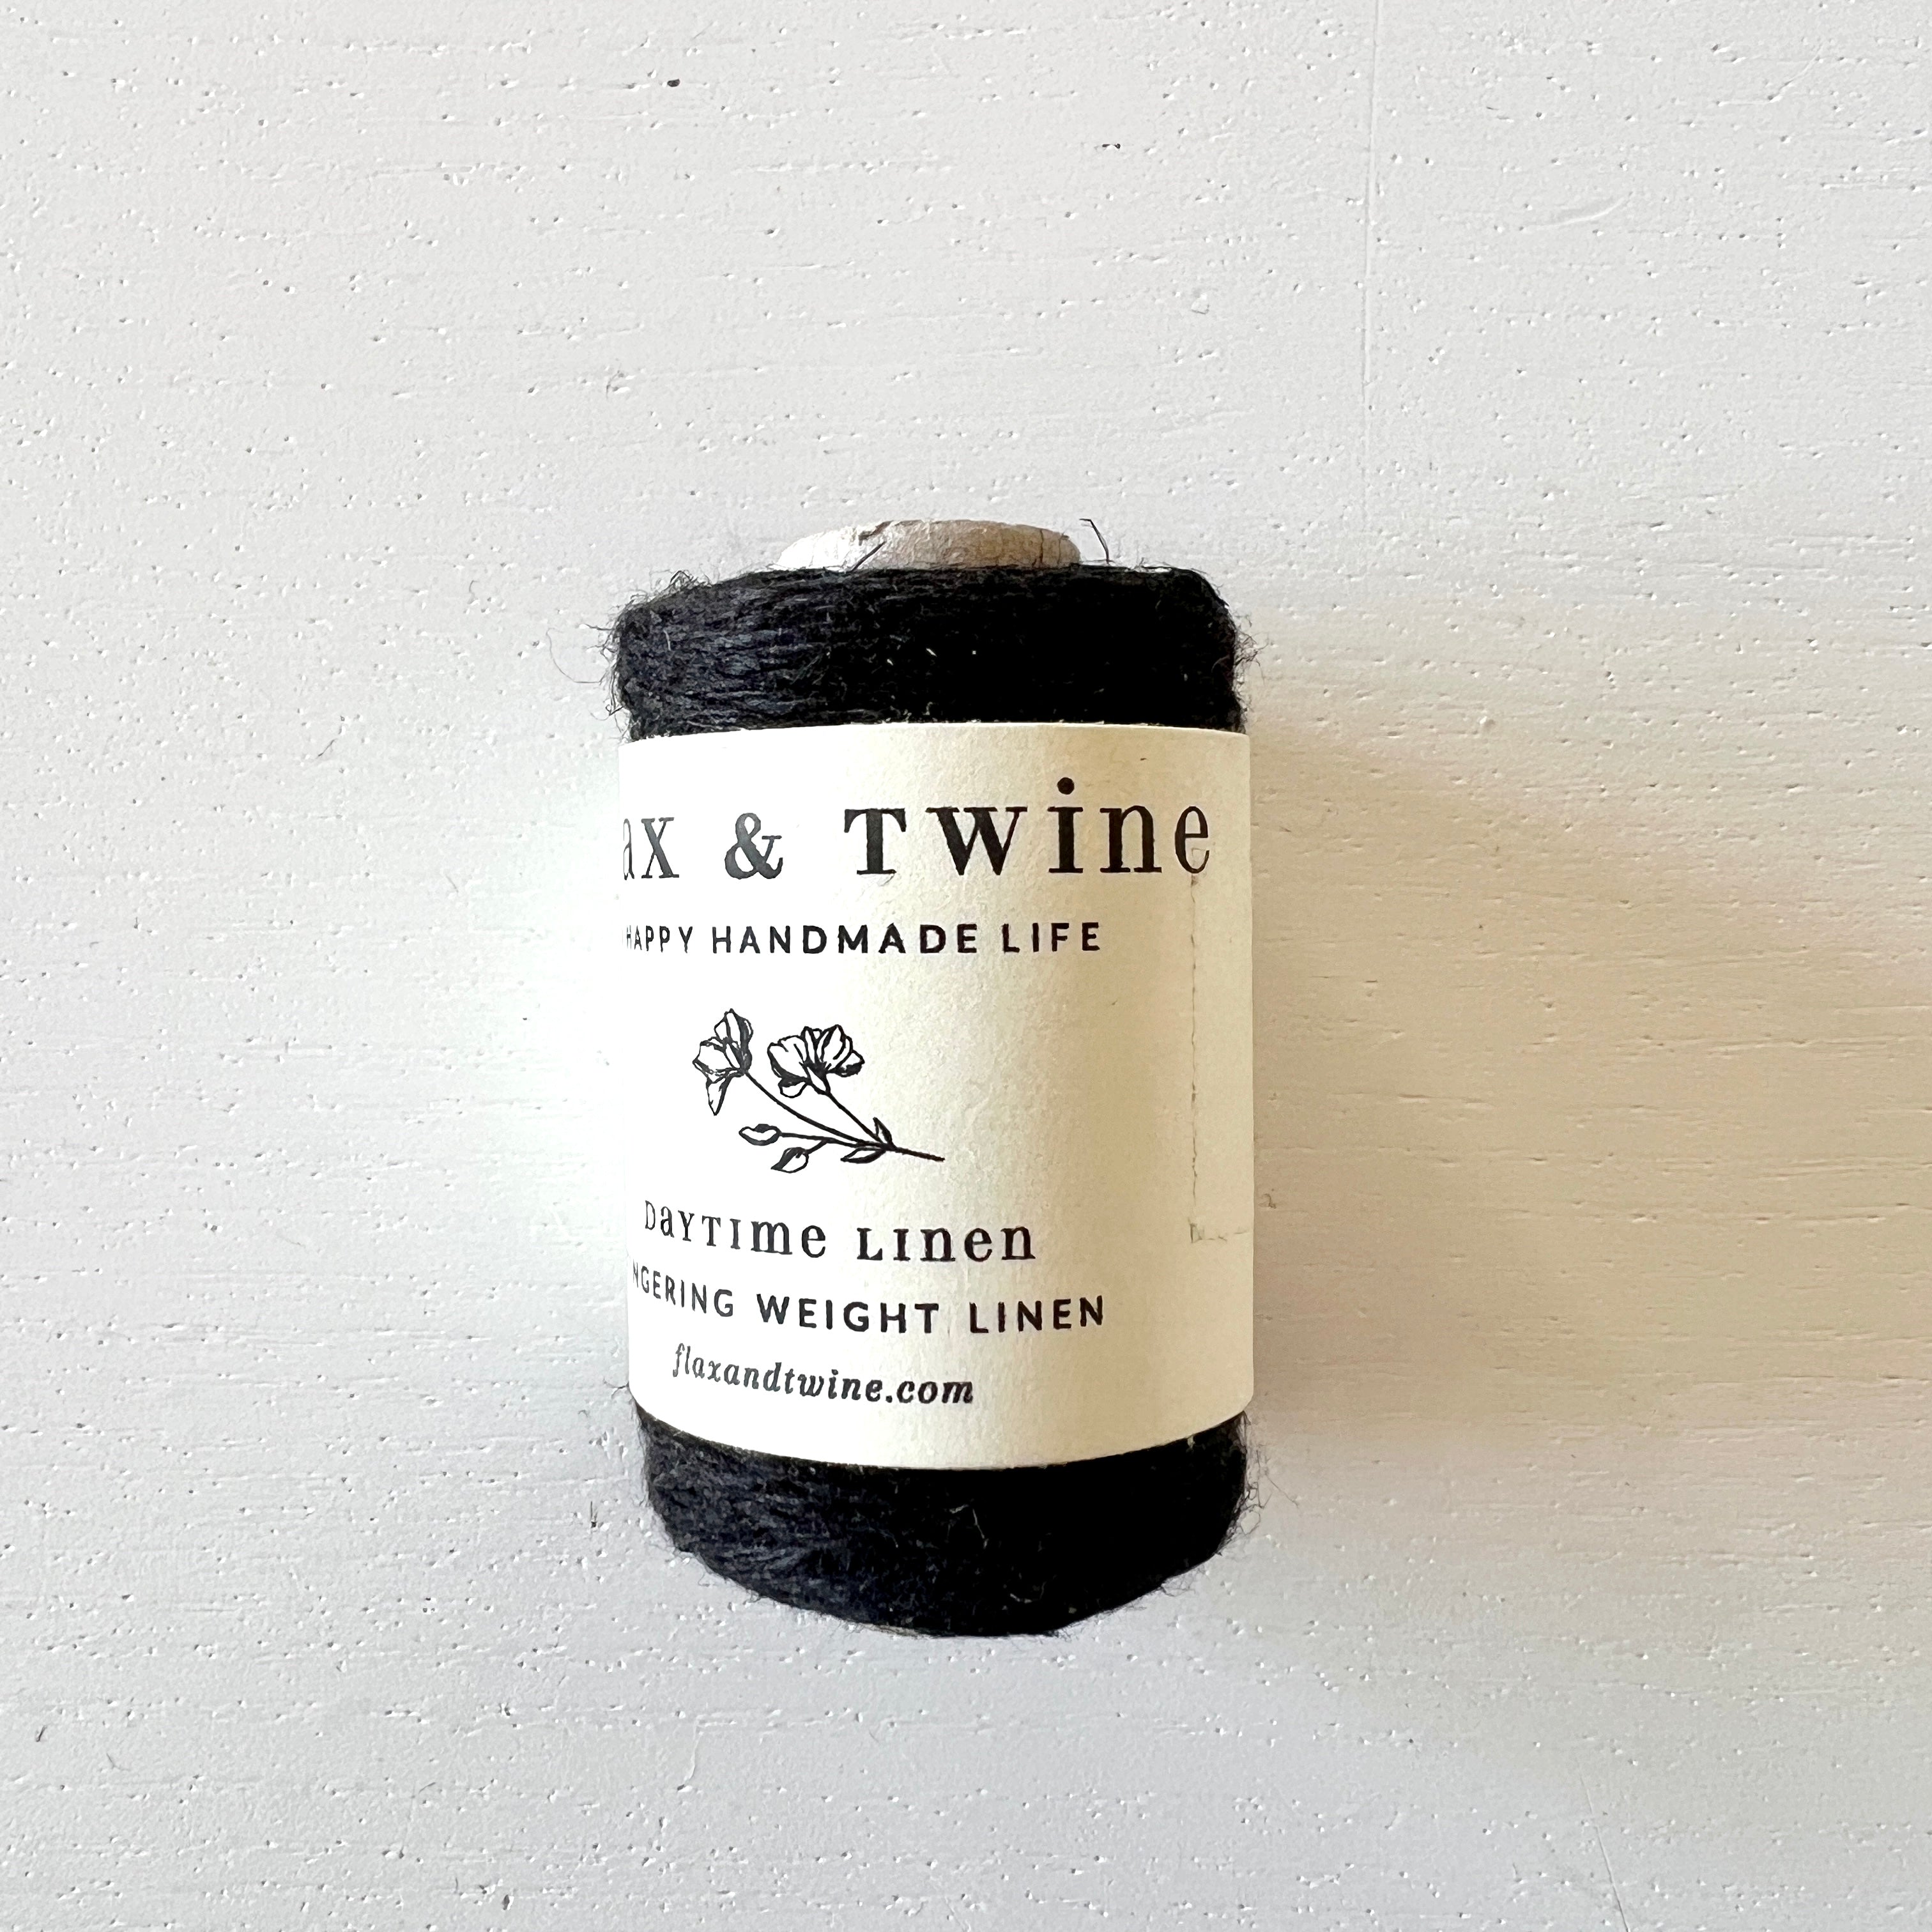 Flax & Twine Daytime Linen - Fingering Weight